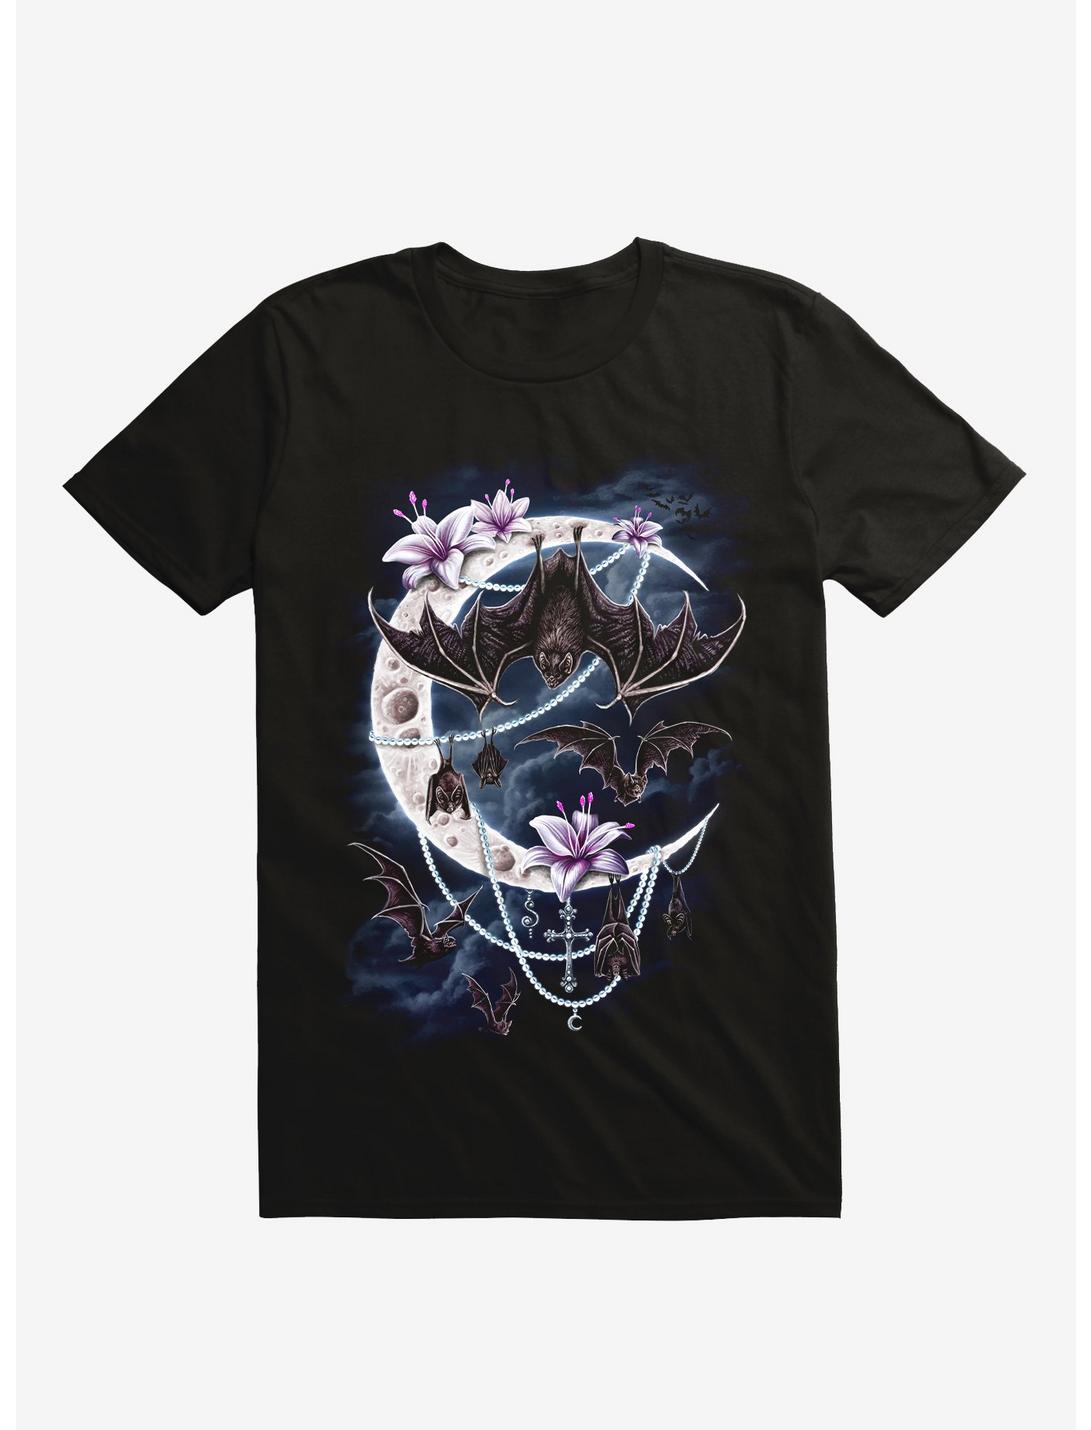 Bats Moon T-Shirt By Sara Richter, BLACK, hi-res